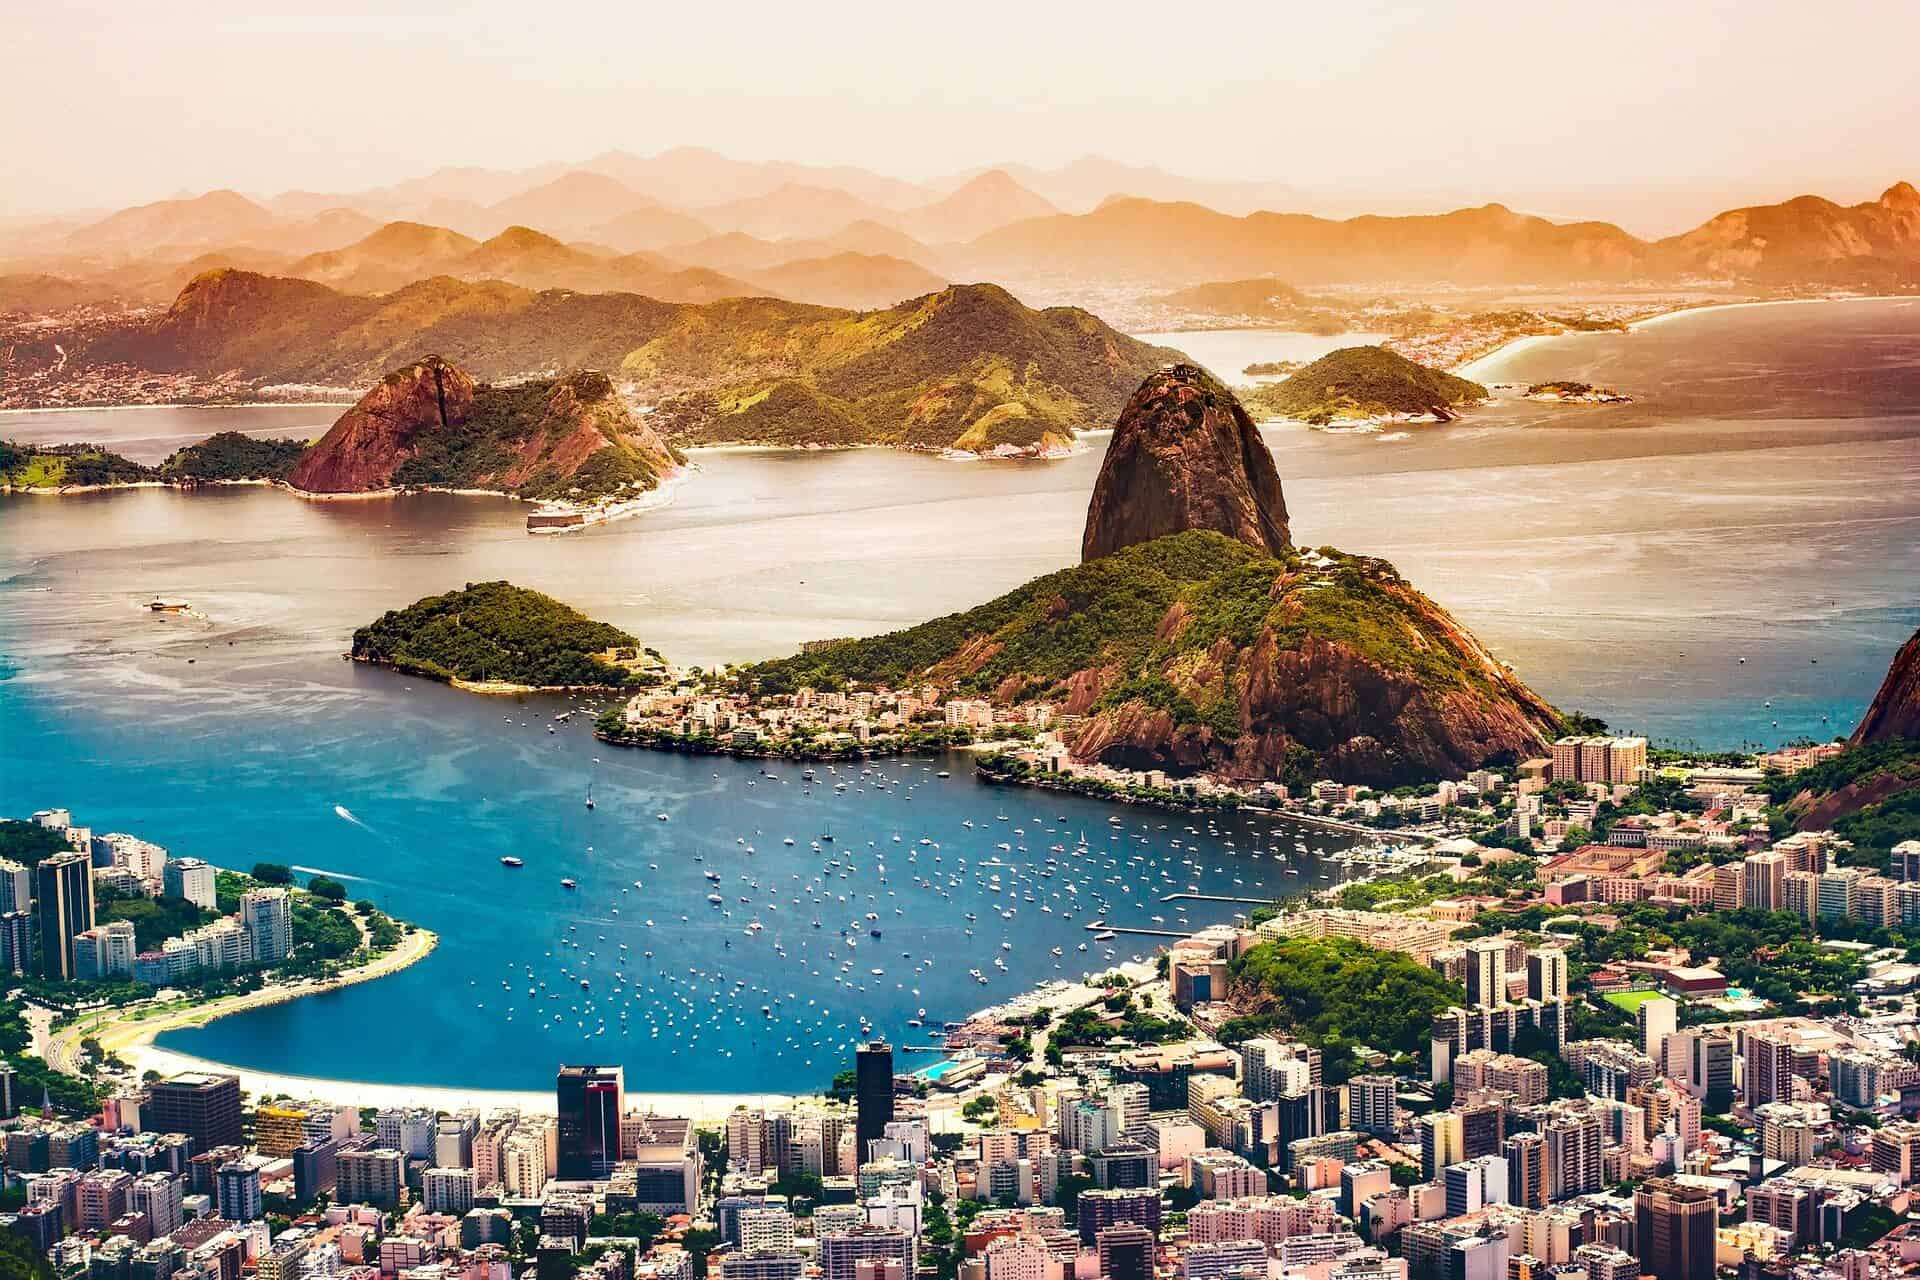 Janeiro free Rio dating in app de Rio de